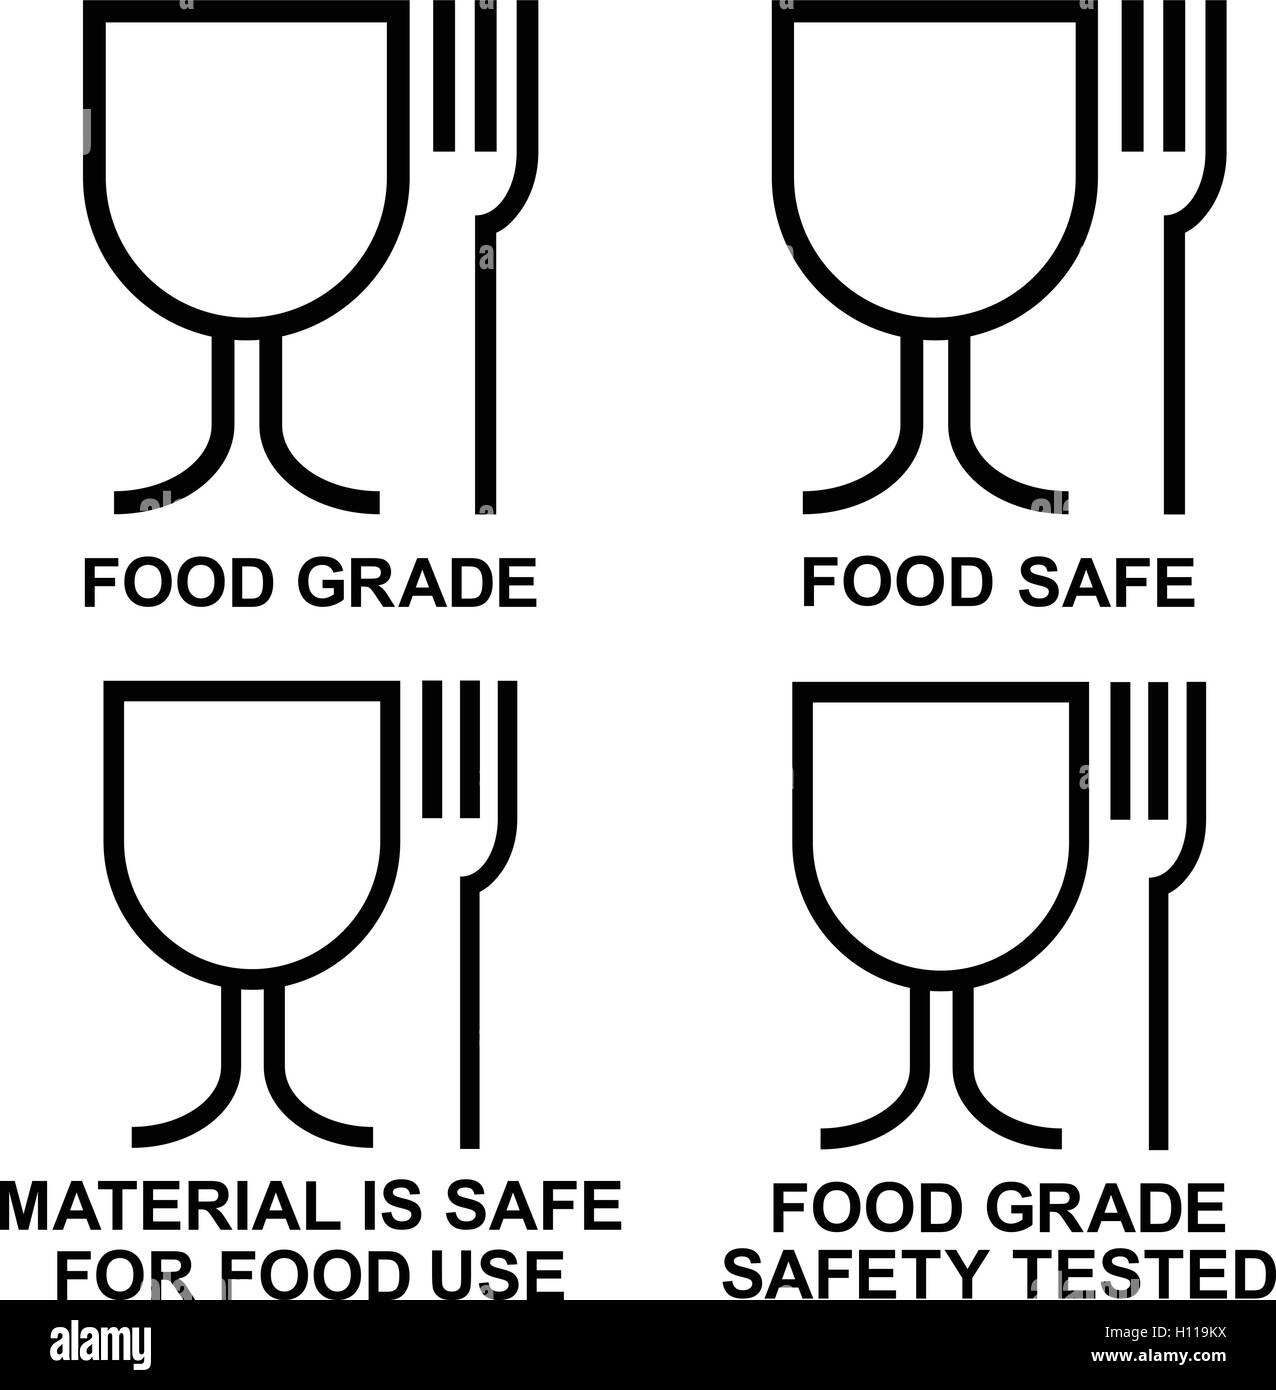 Food Safety Symbols